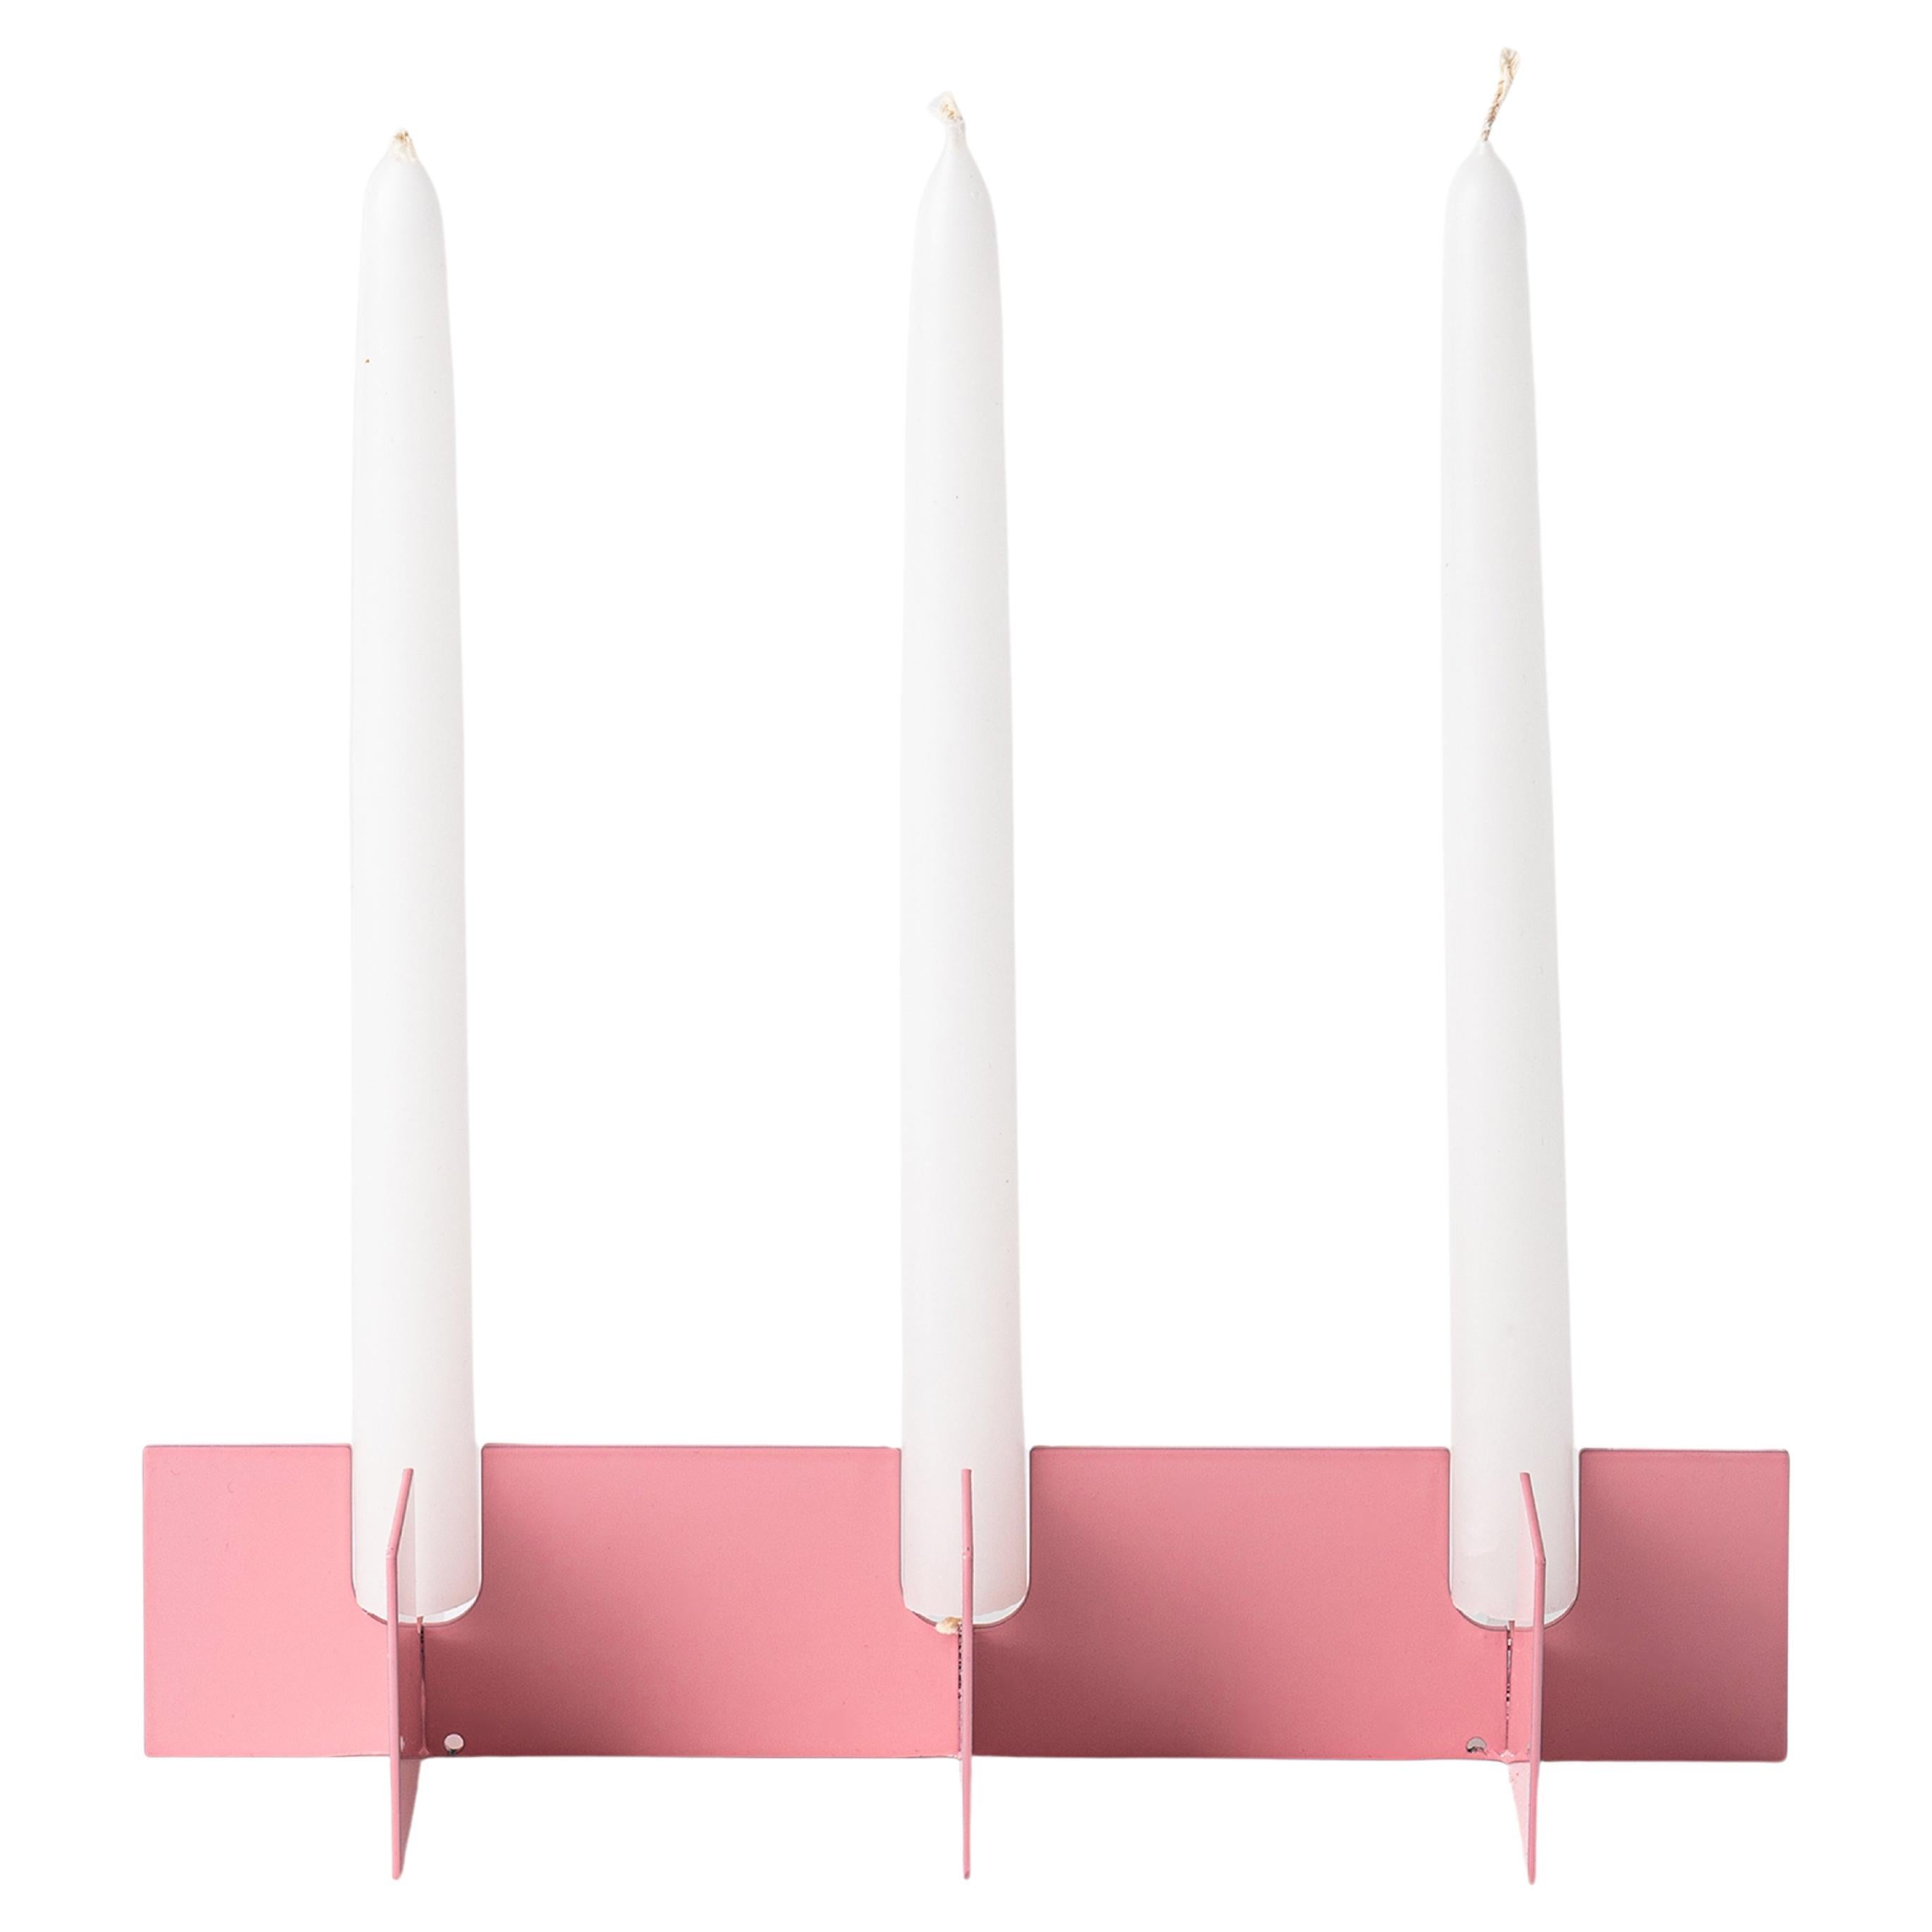 Porte-bougies trois bougies Esnaf moderne contemporain rose en vente